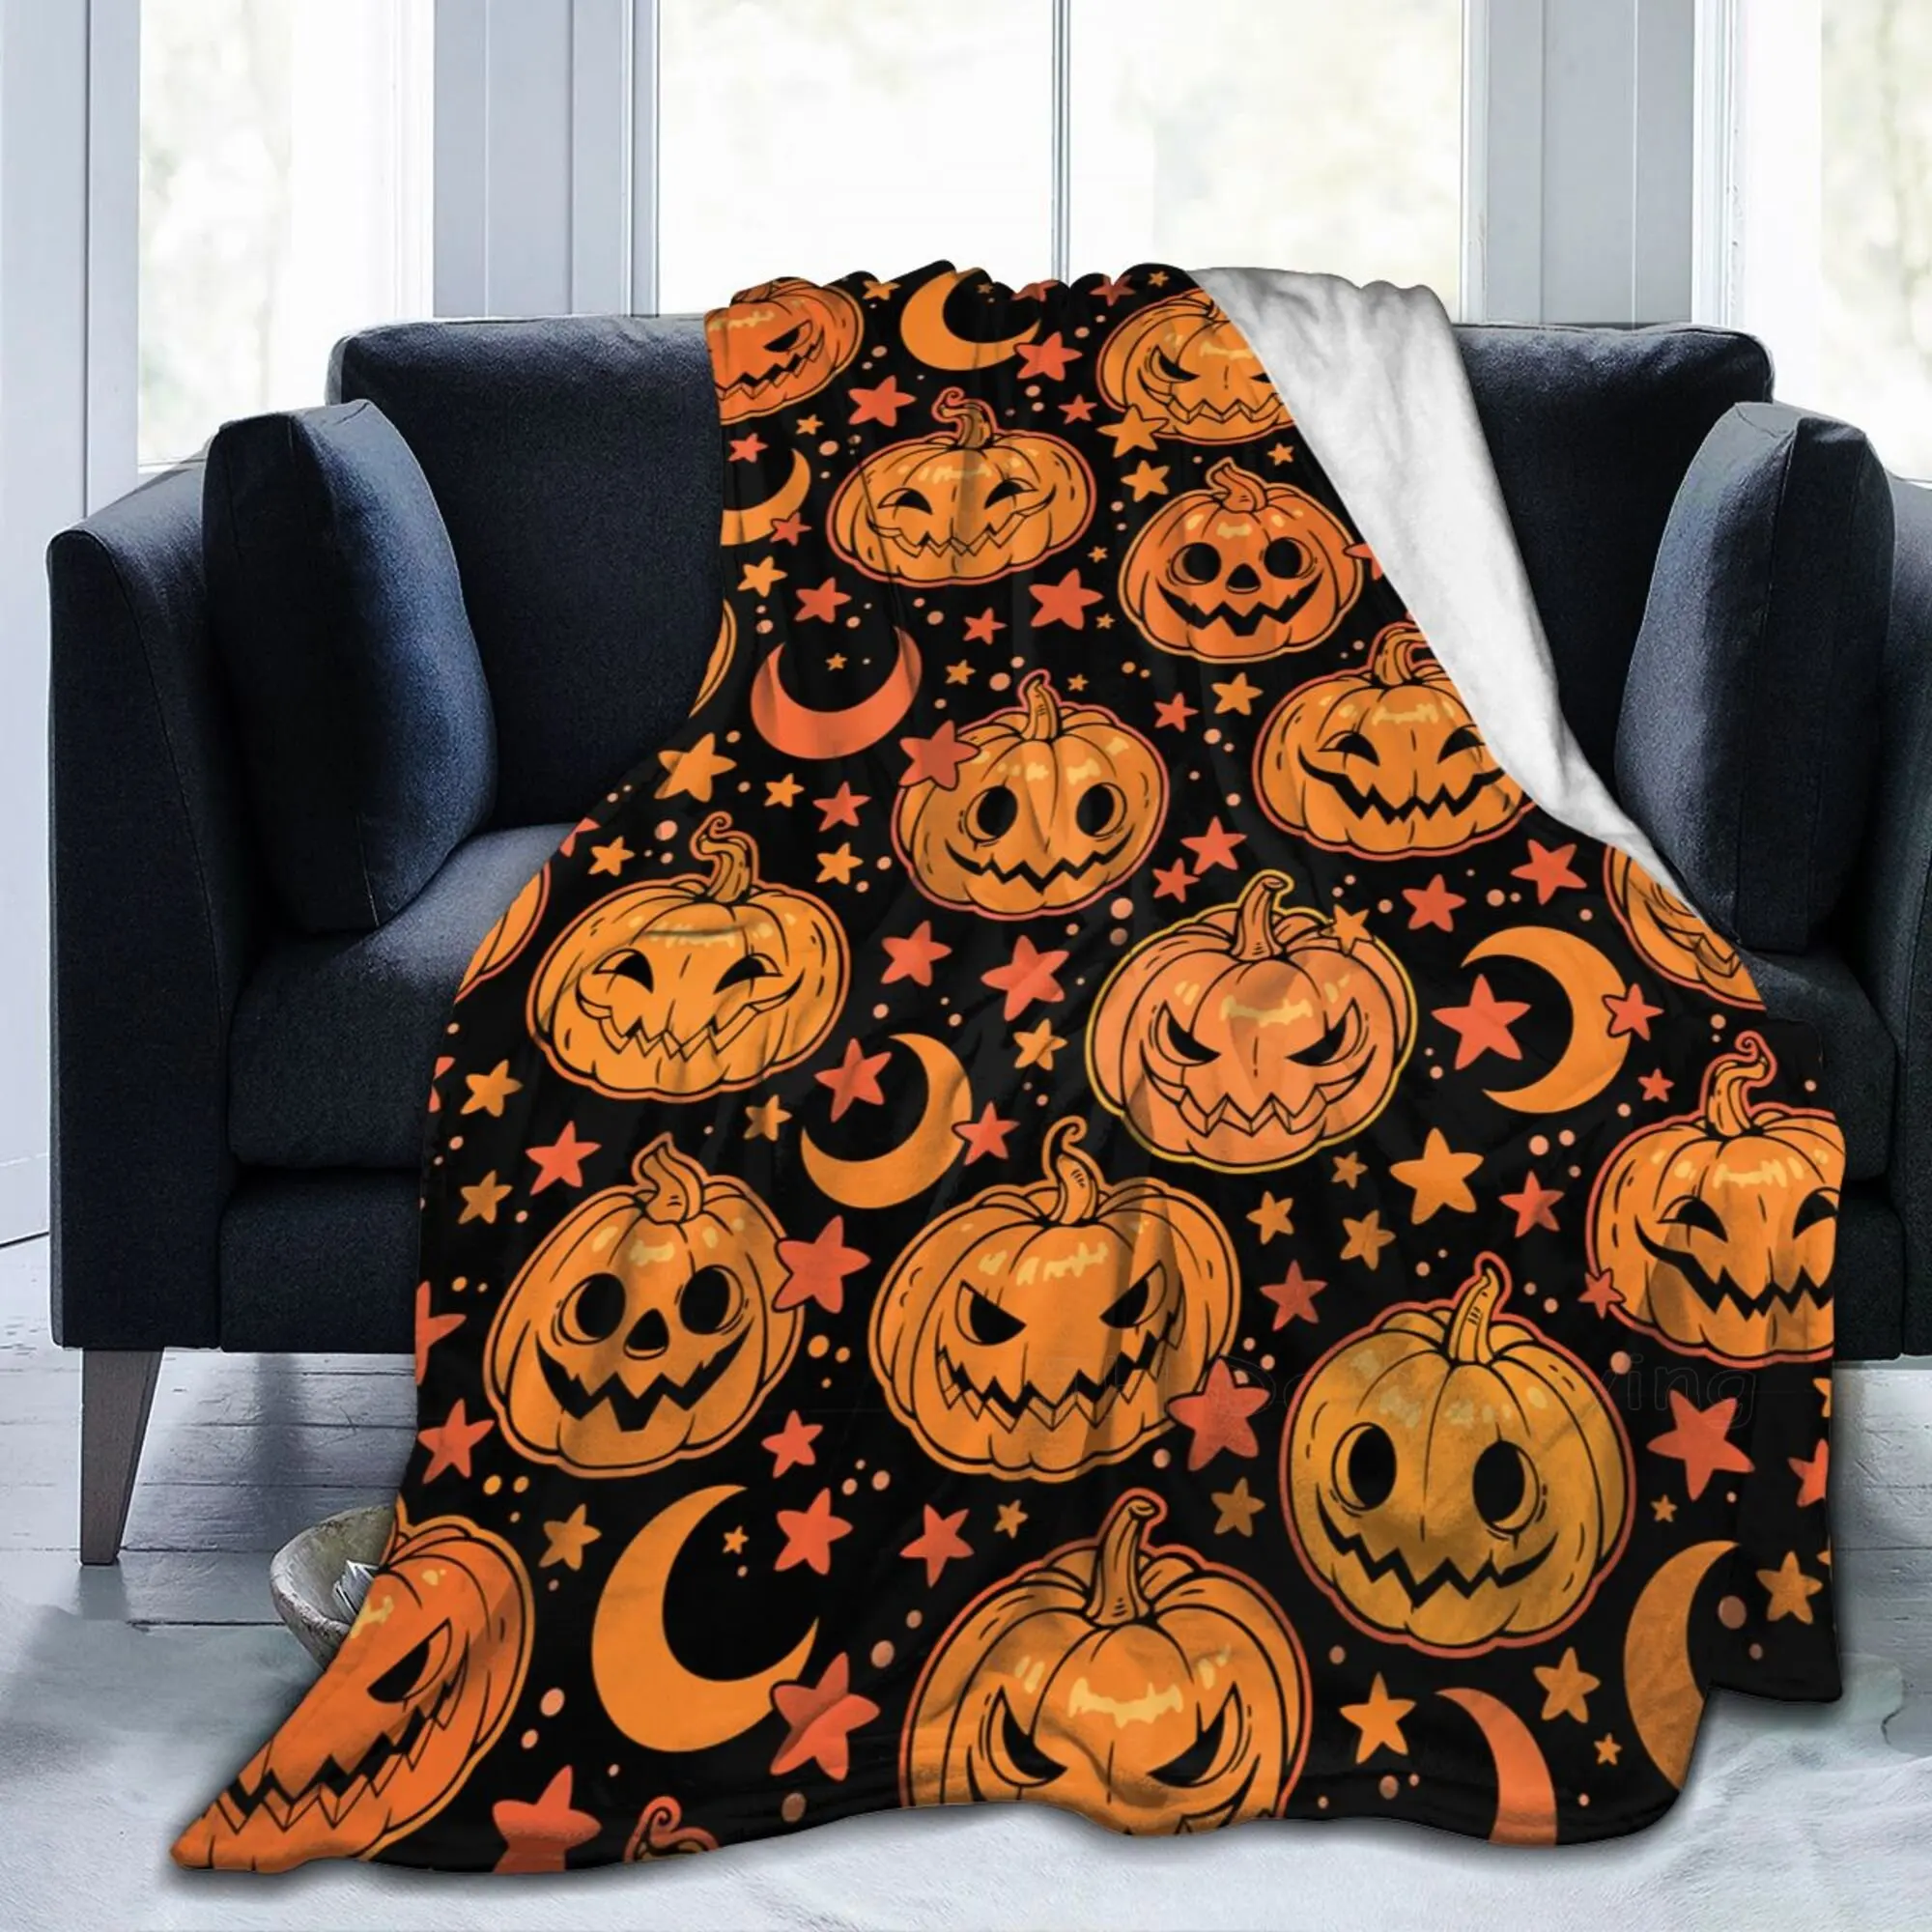 

Autumn Pumpkin Maple Fannel Fleece Throw Blanket Portable Warm Soft Cozy Blankets Lightweight Bedspread for Home Office Picnic